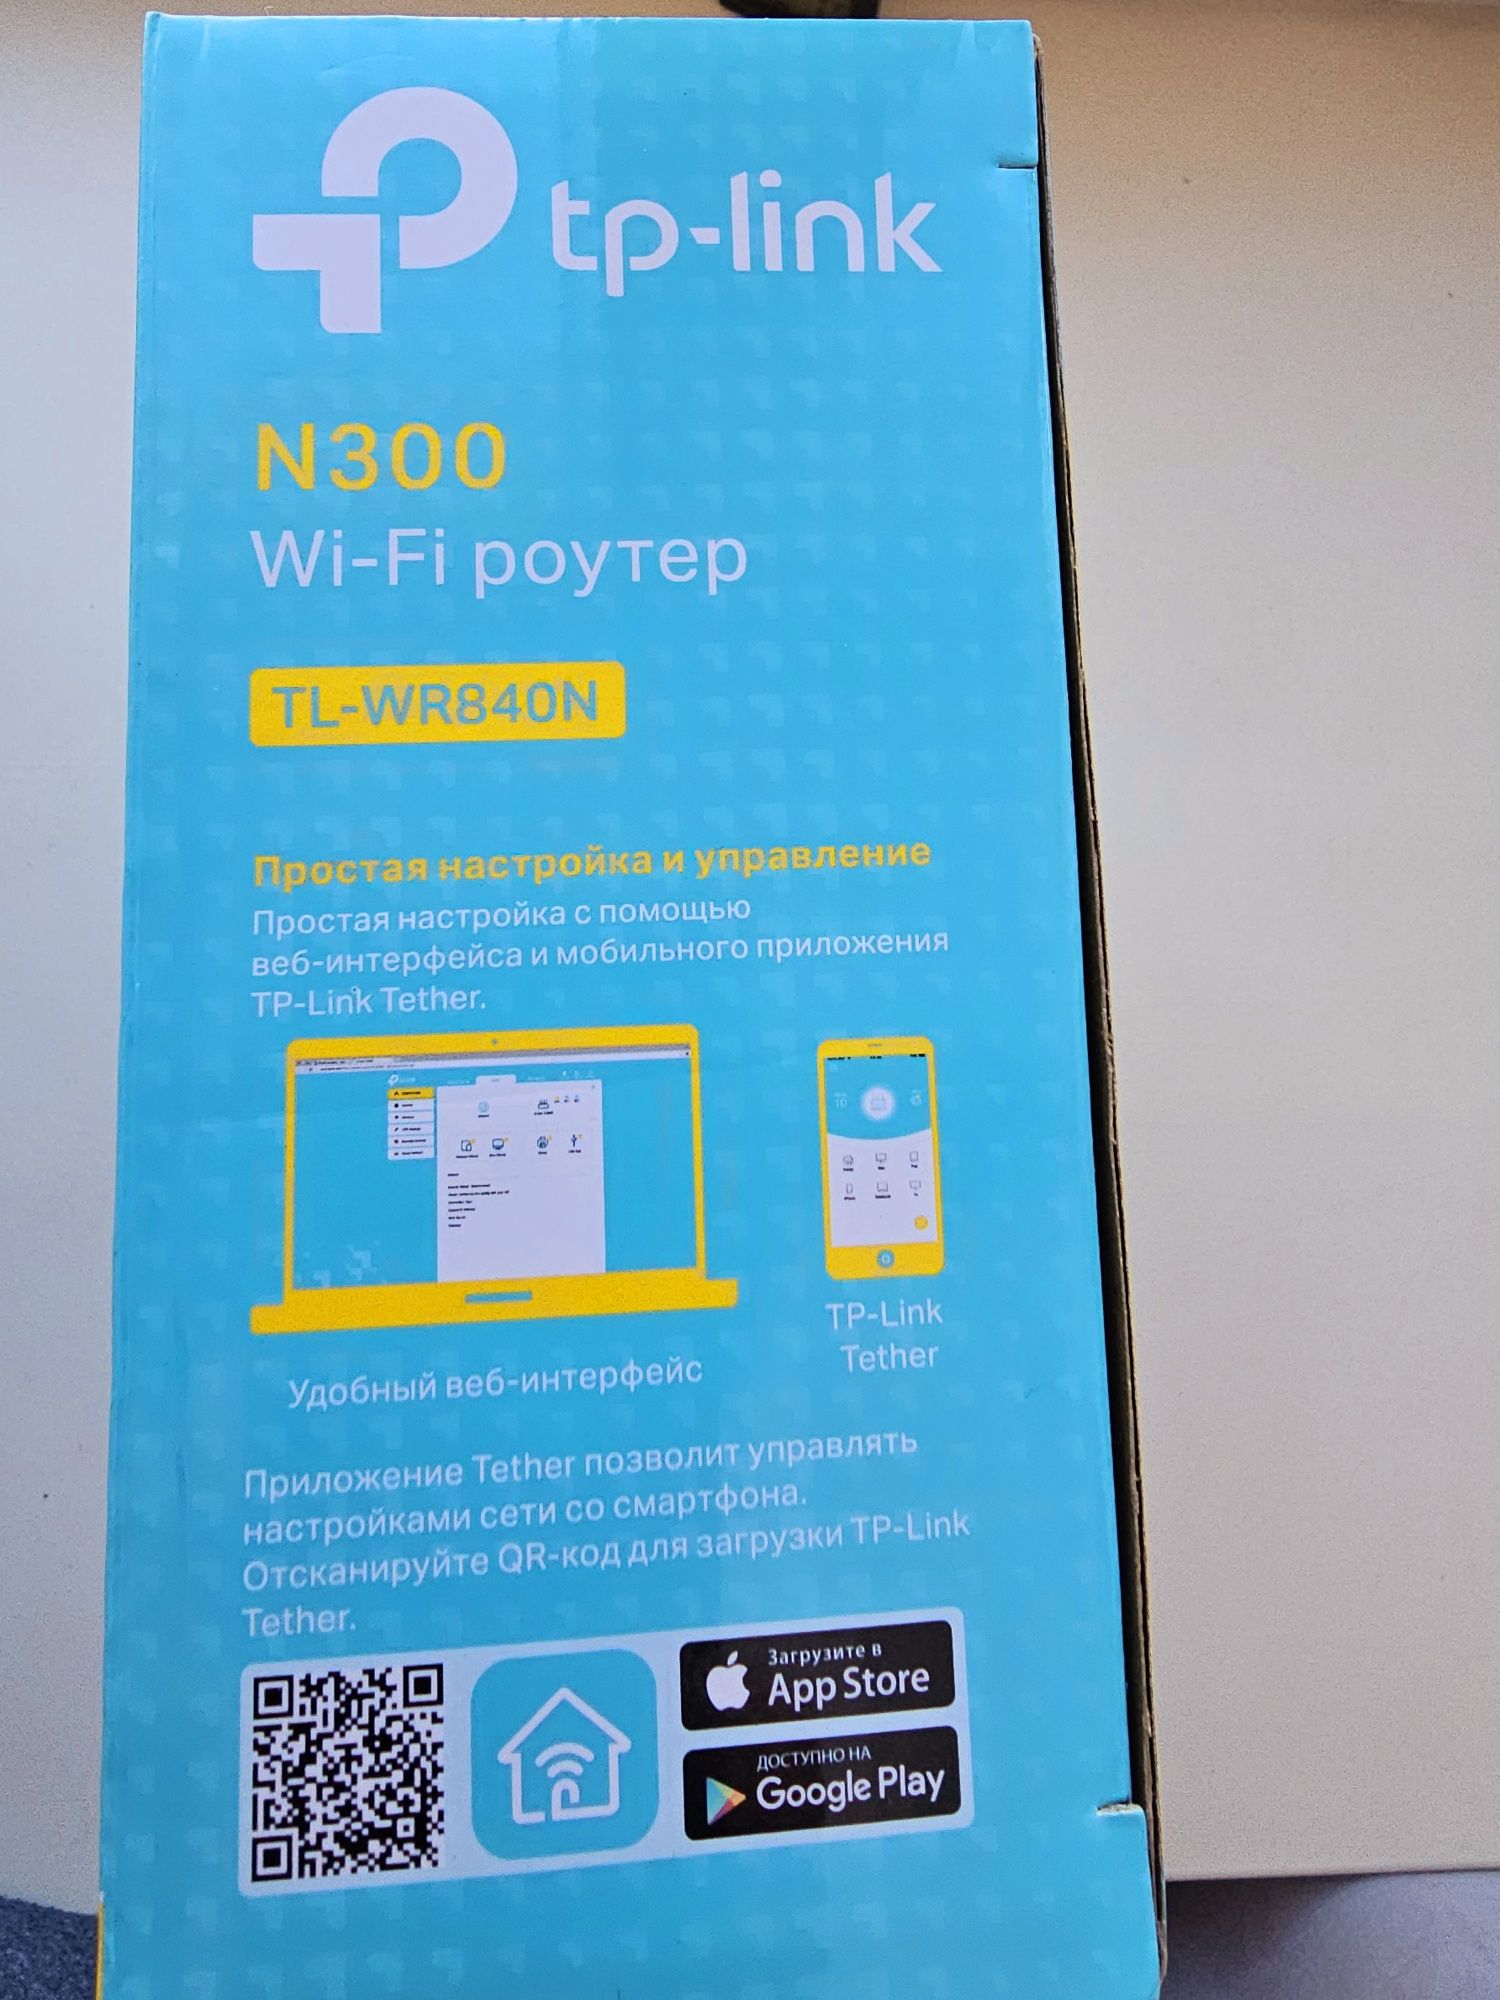 Wi-Fi роутер Tp-link TL-WR840N